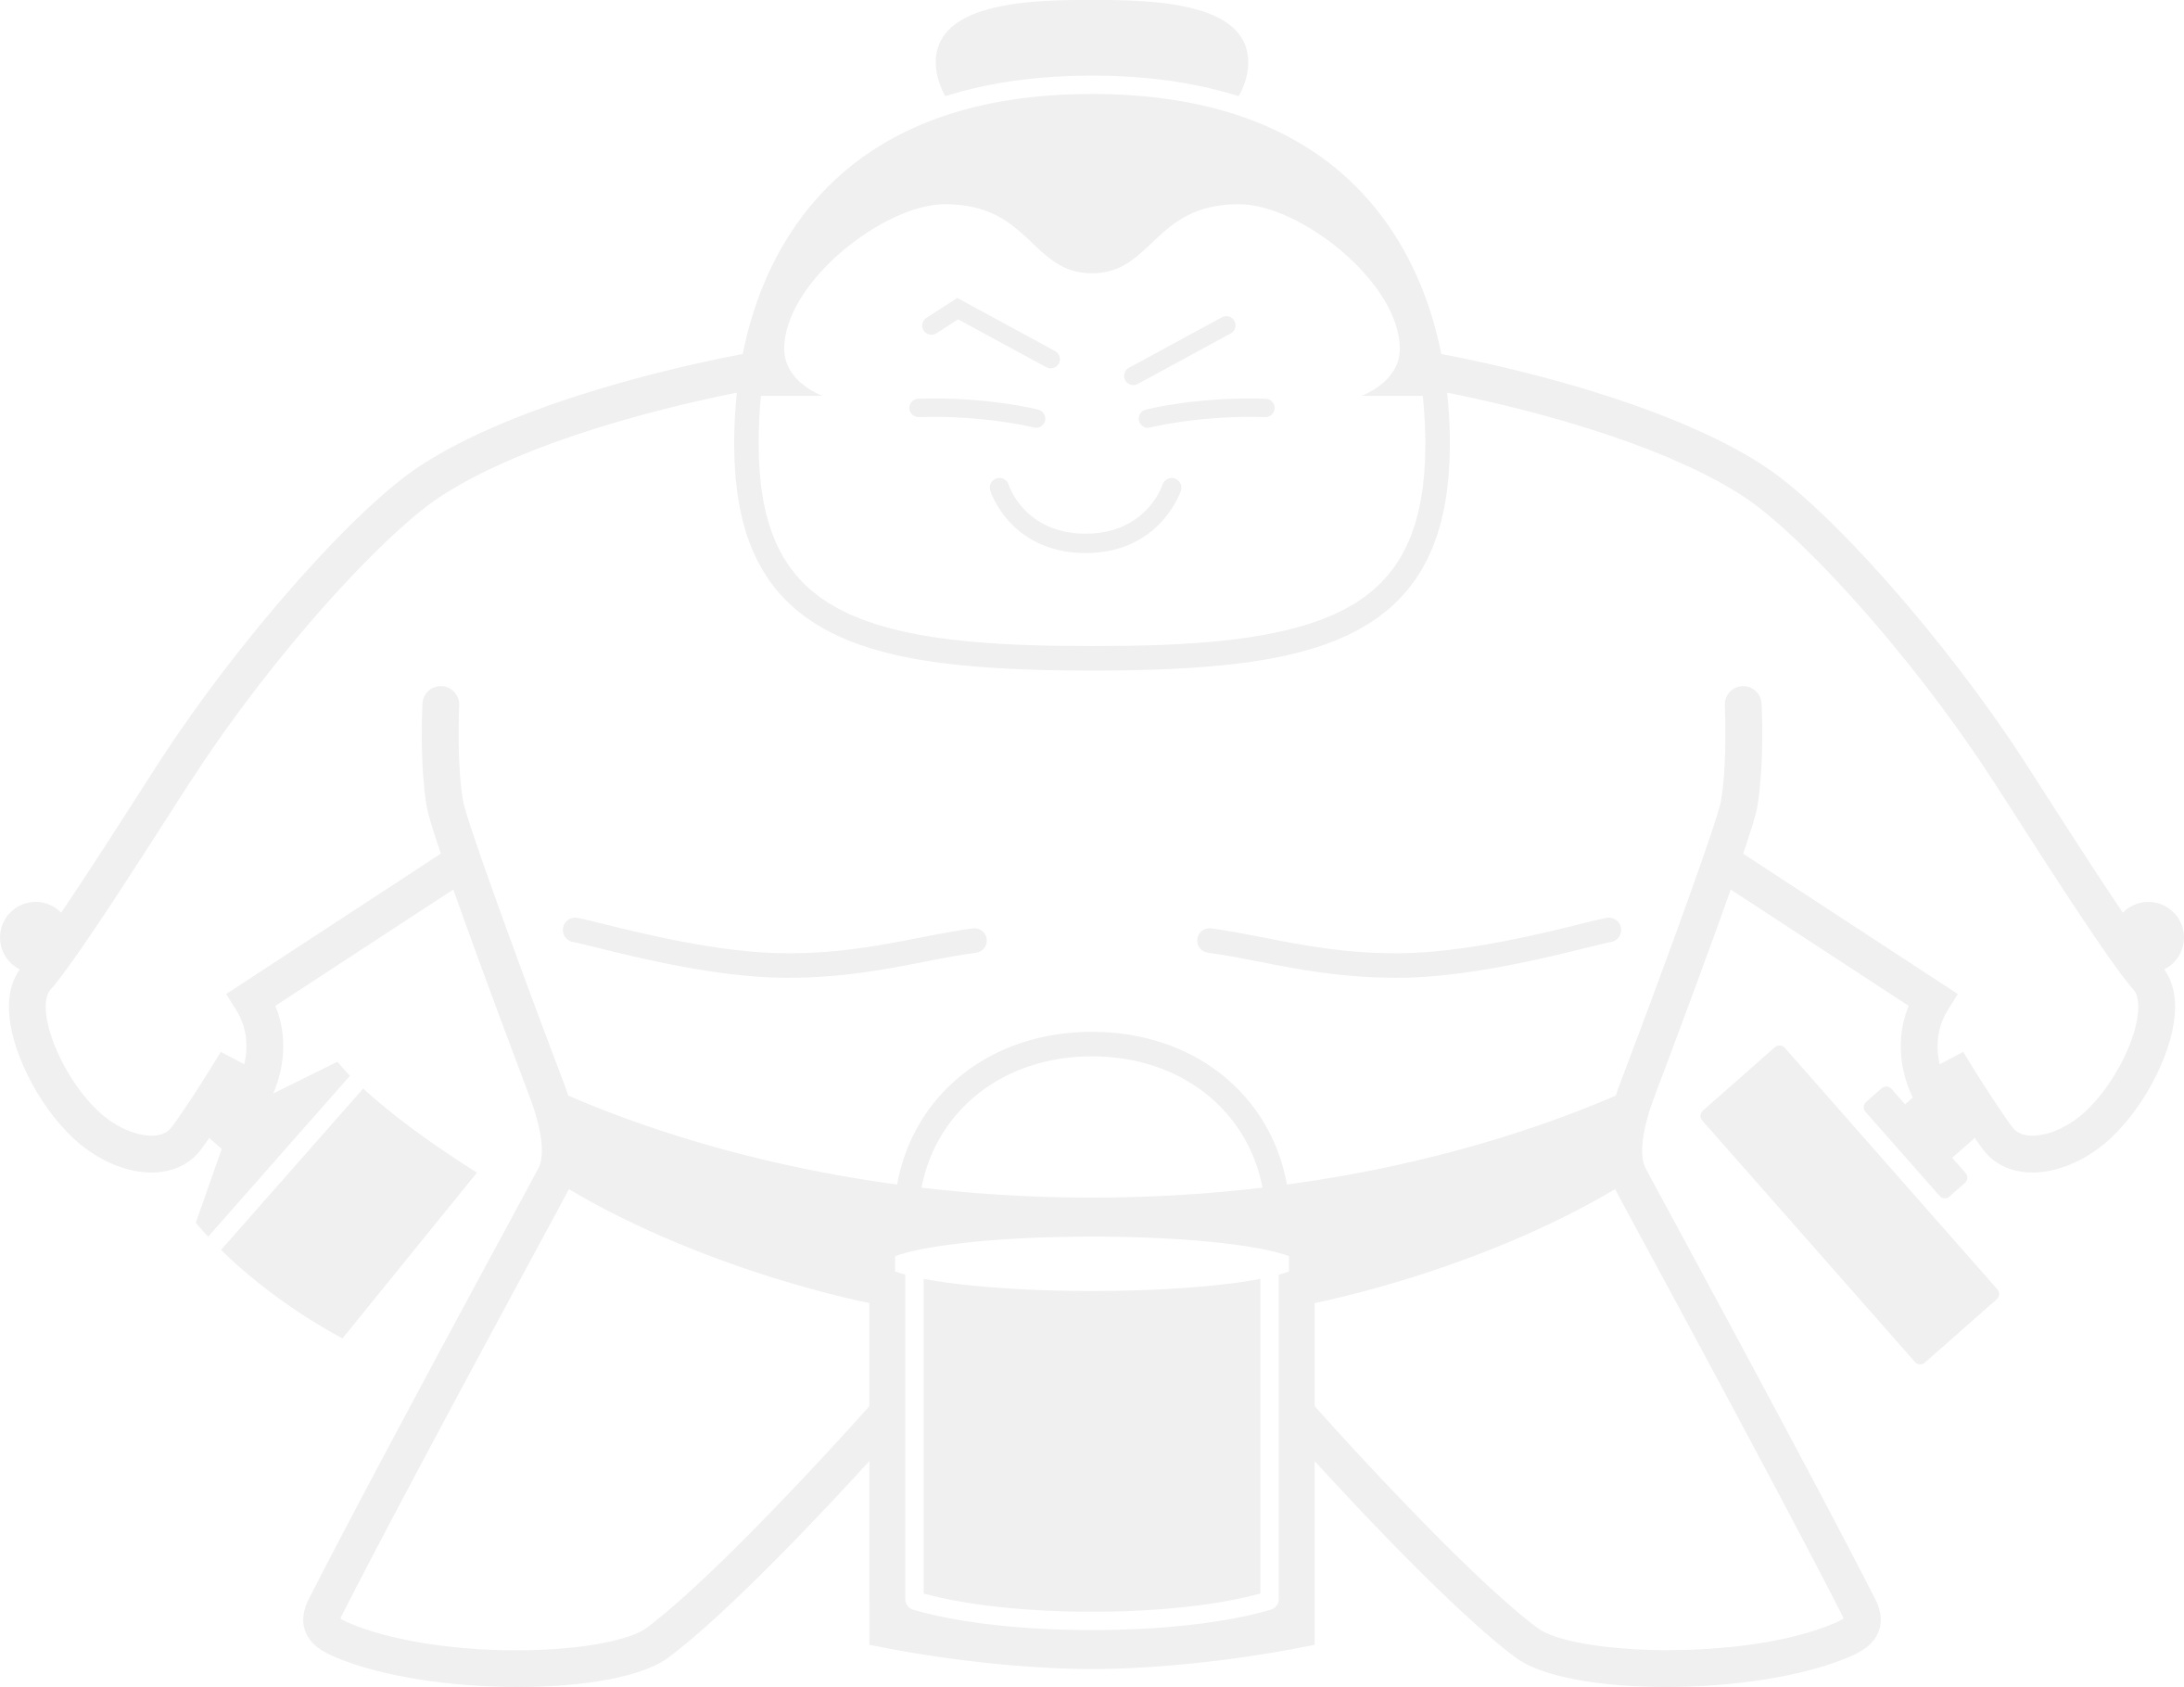 A Sumo Wrester Illustration